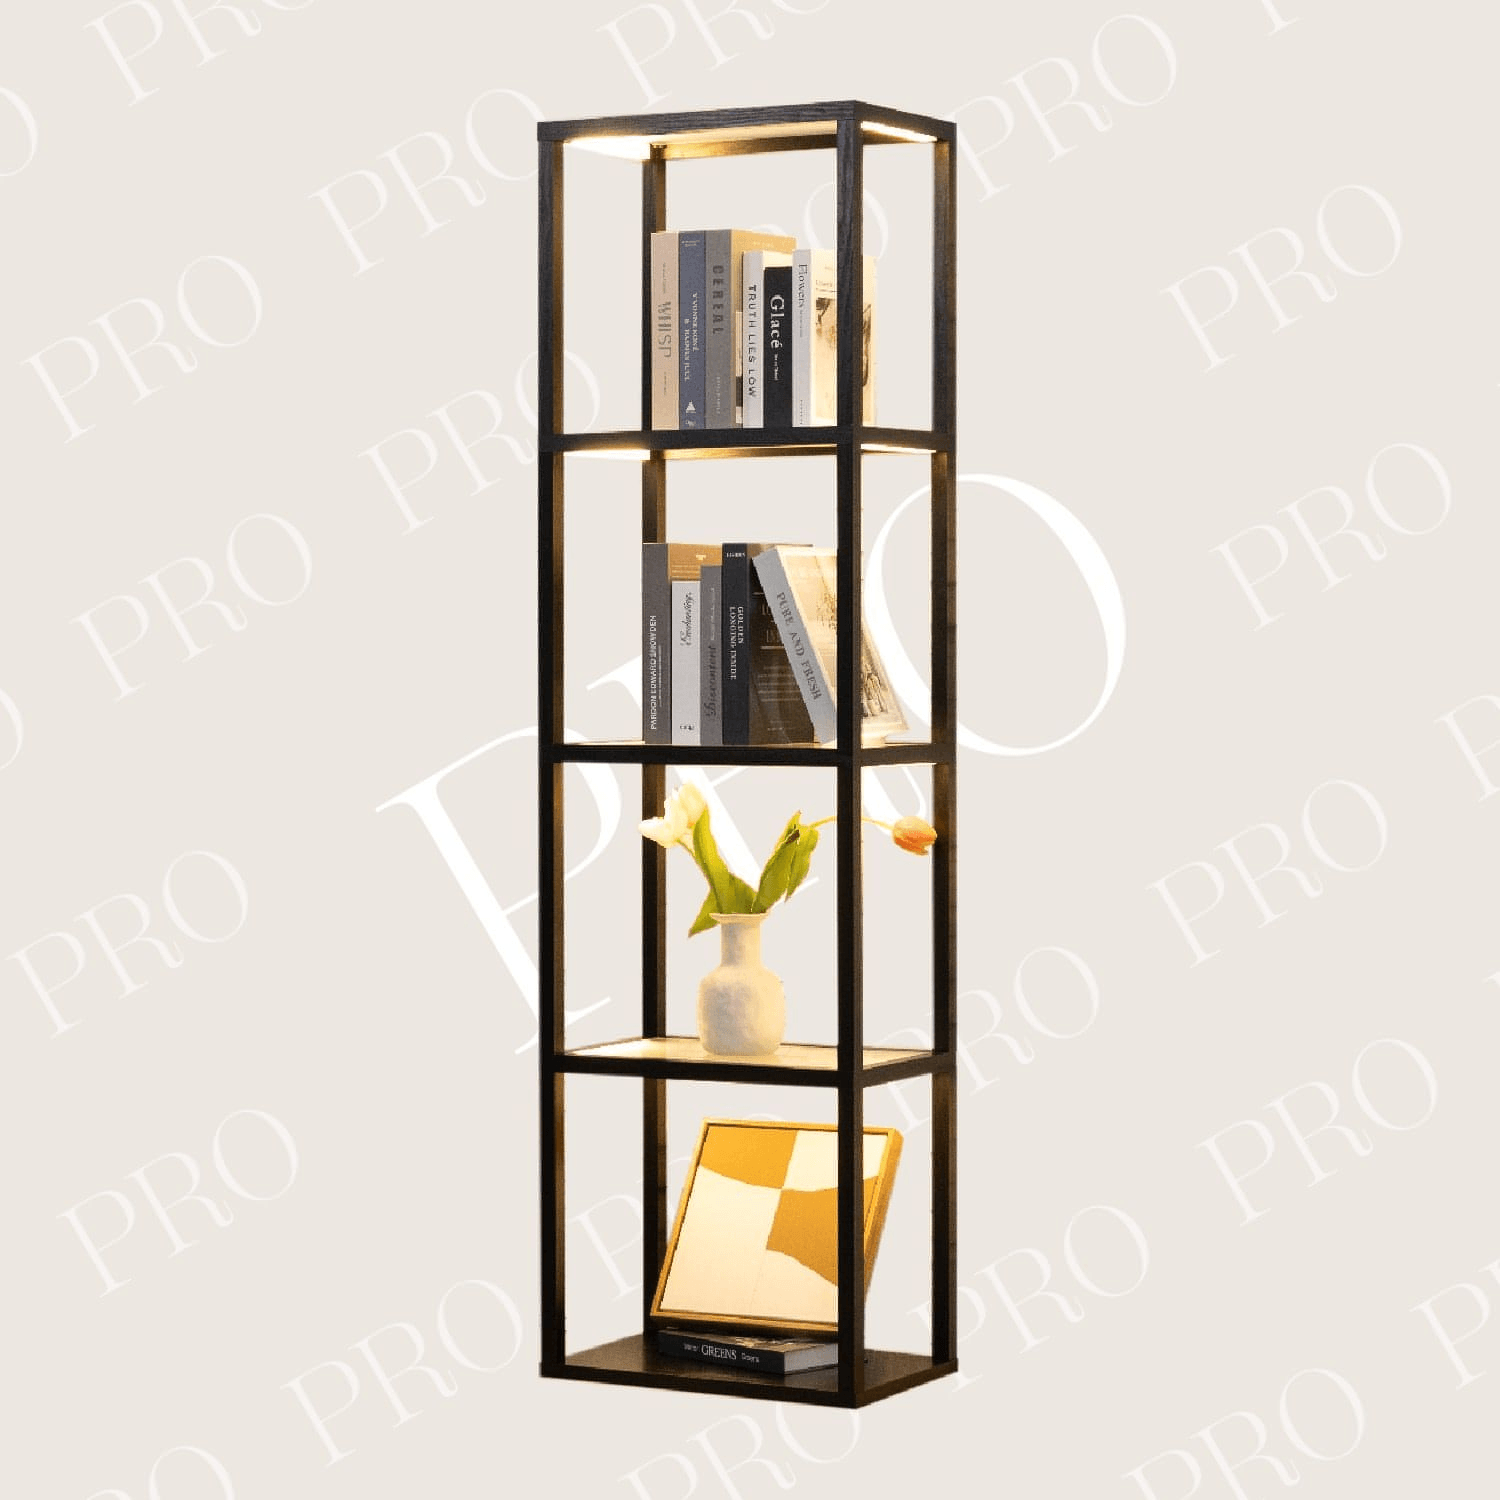 NEW PRO edition glass display shelf with lighting